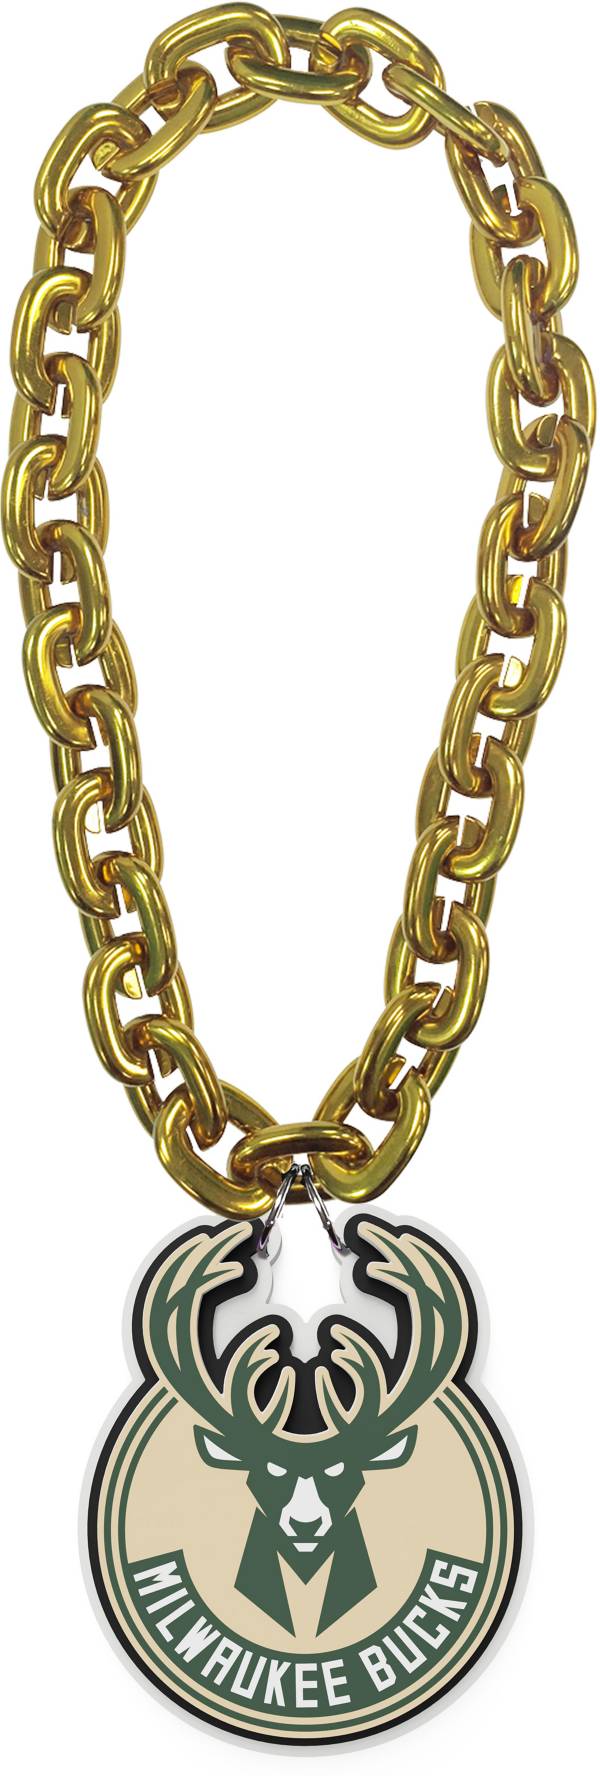 Aminco Milwaukee Bucks Gold Fan Chain product image